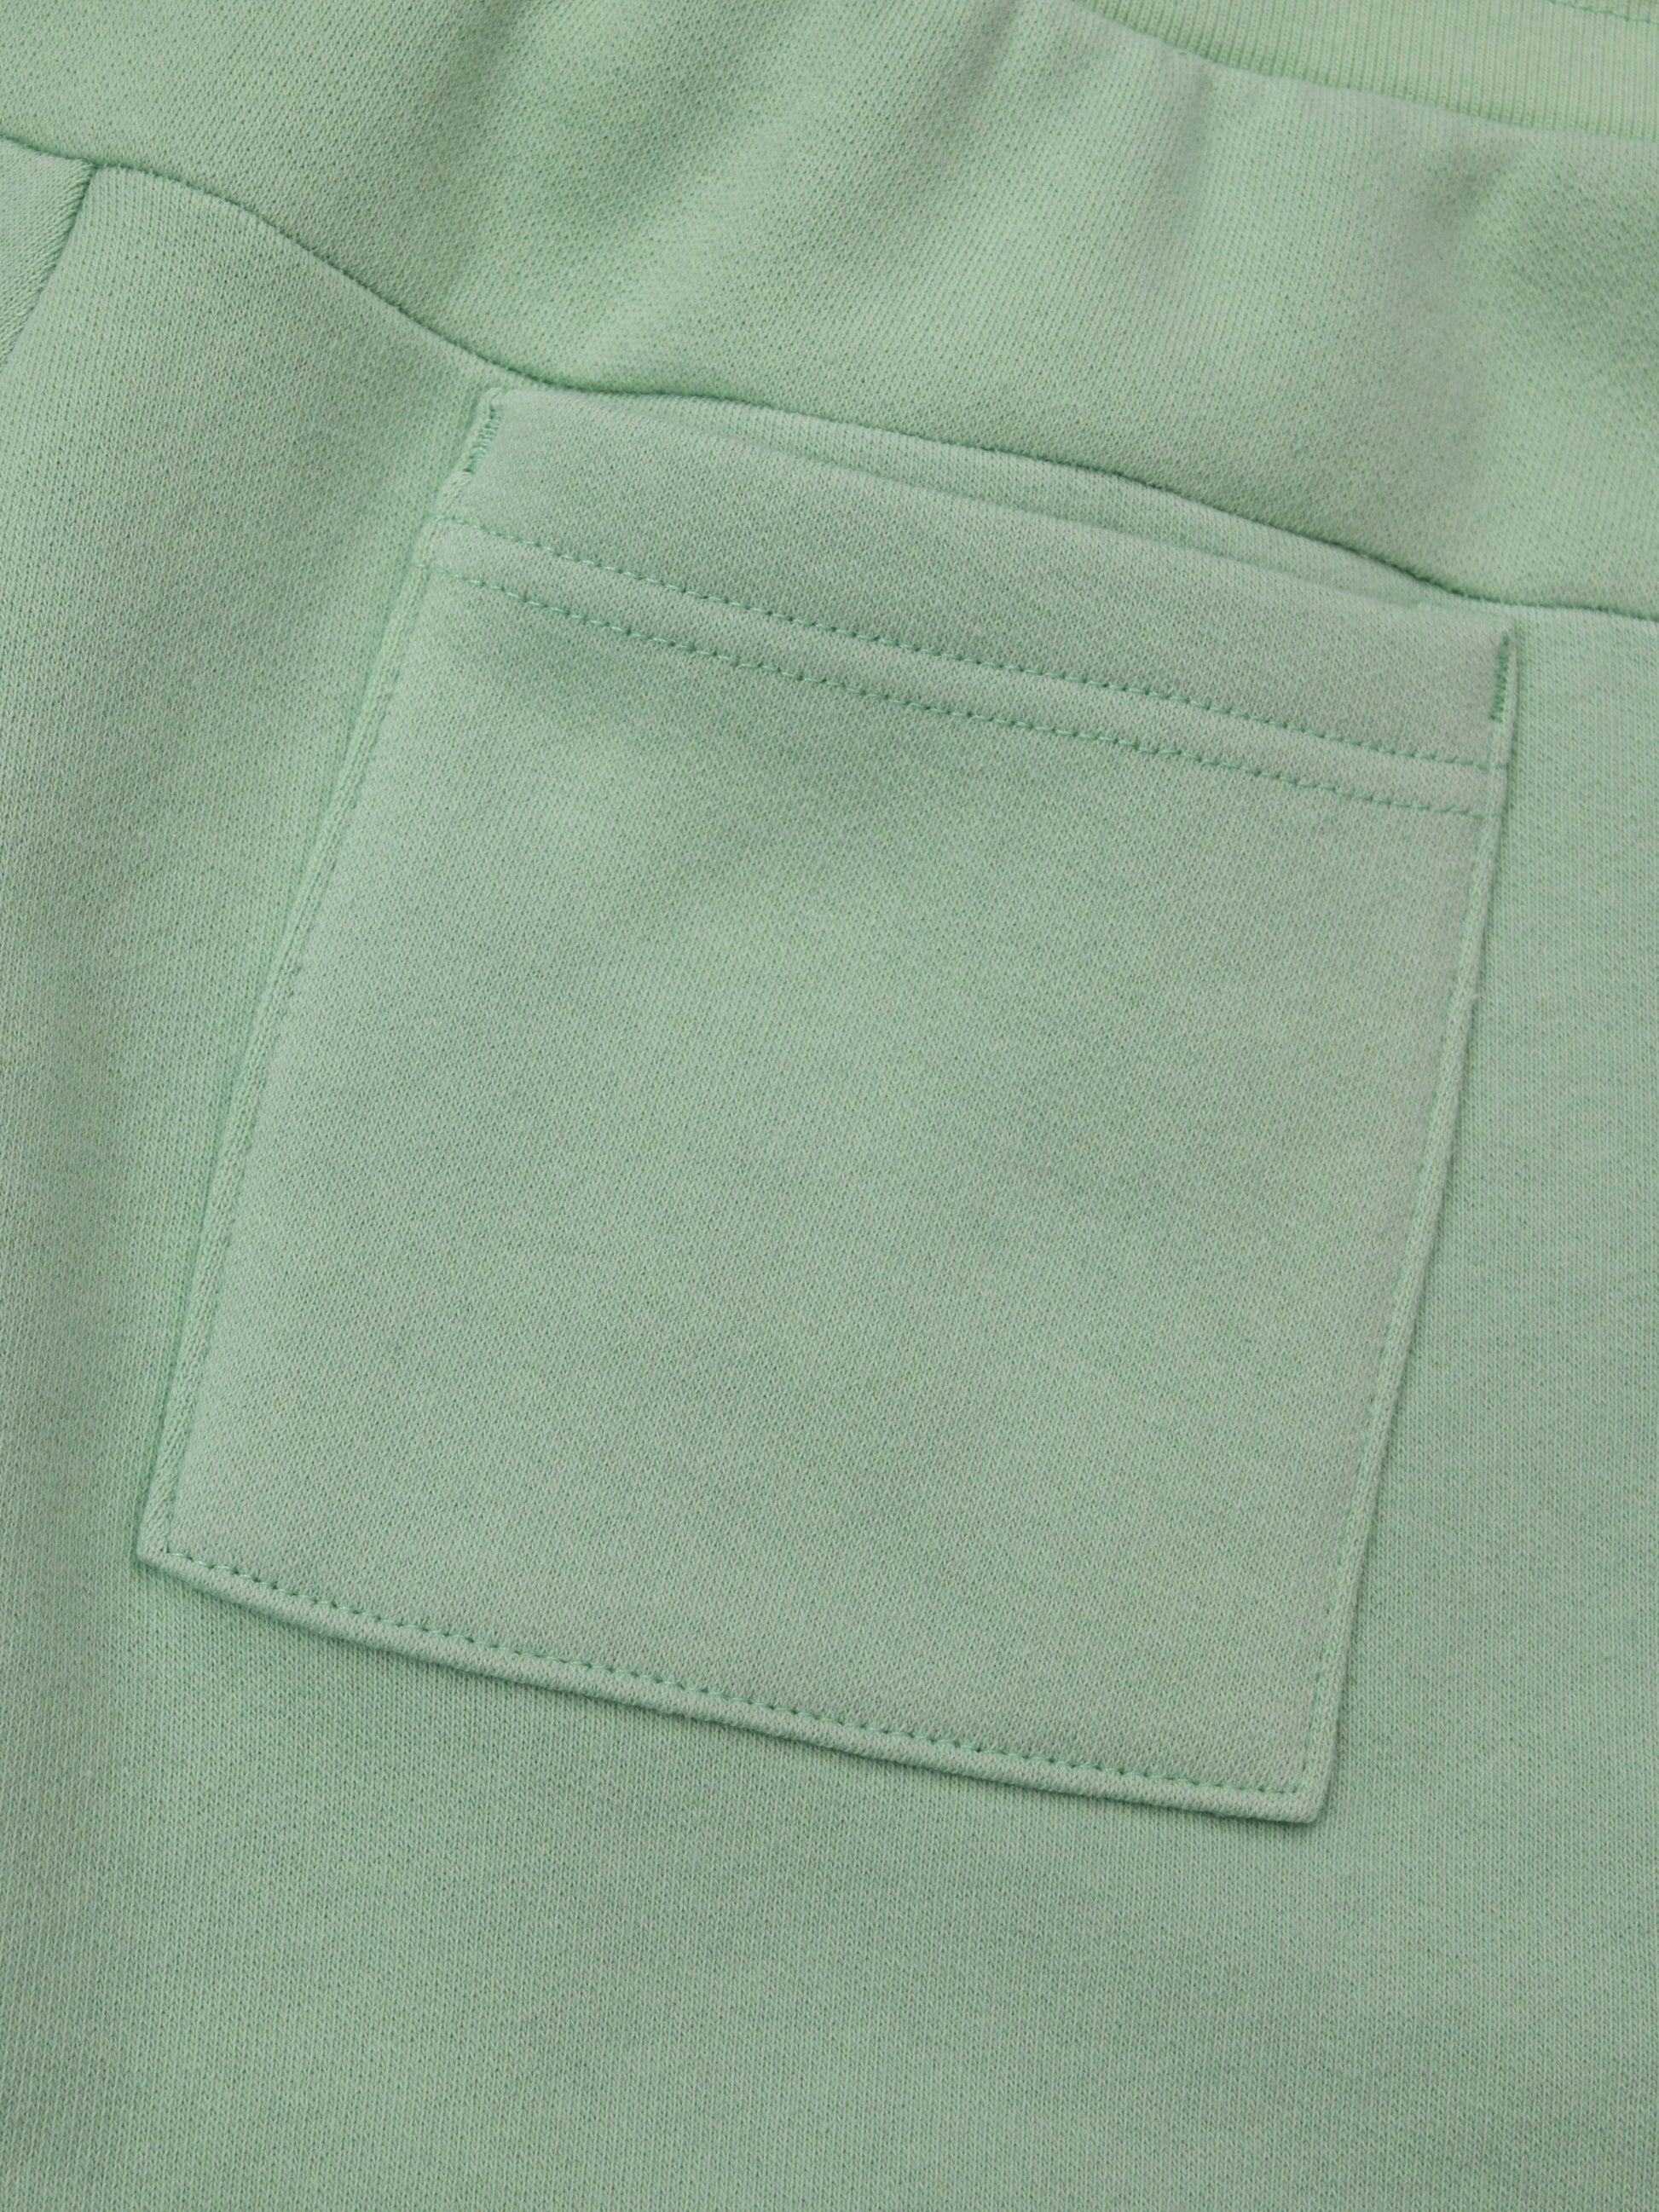 Close up of Jogger's Back Pocket